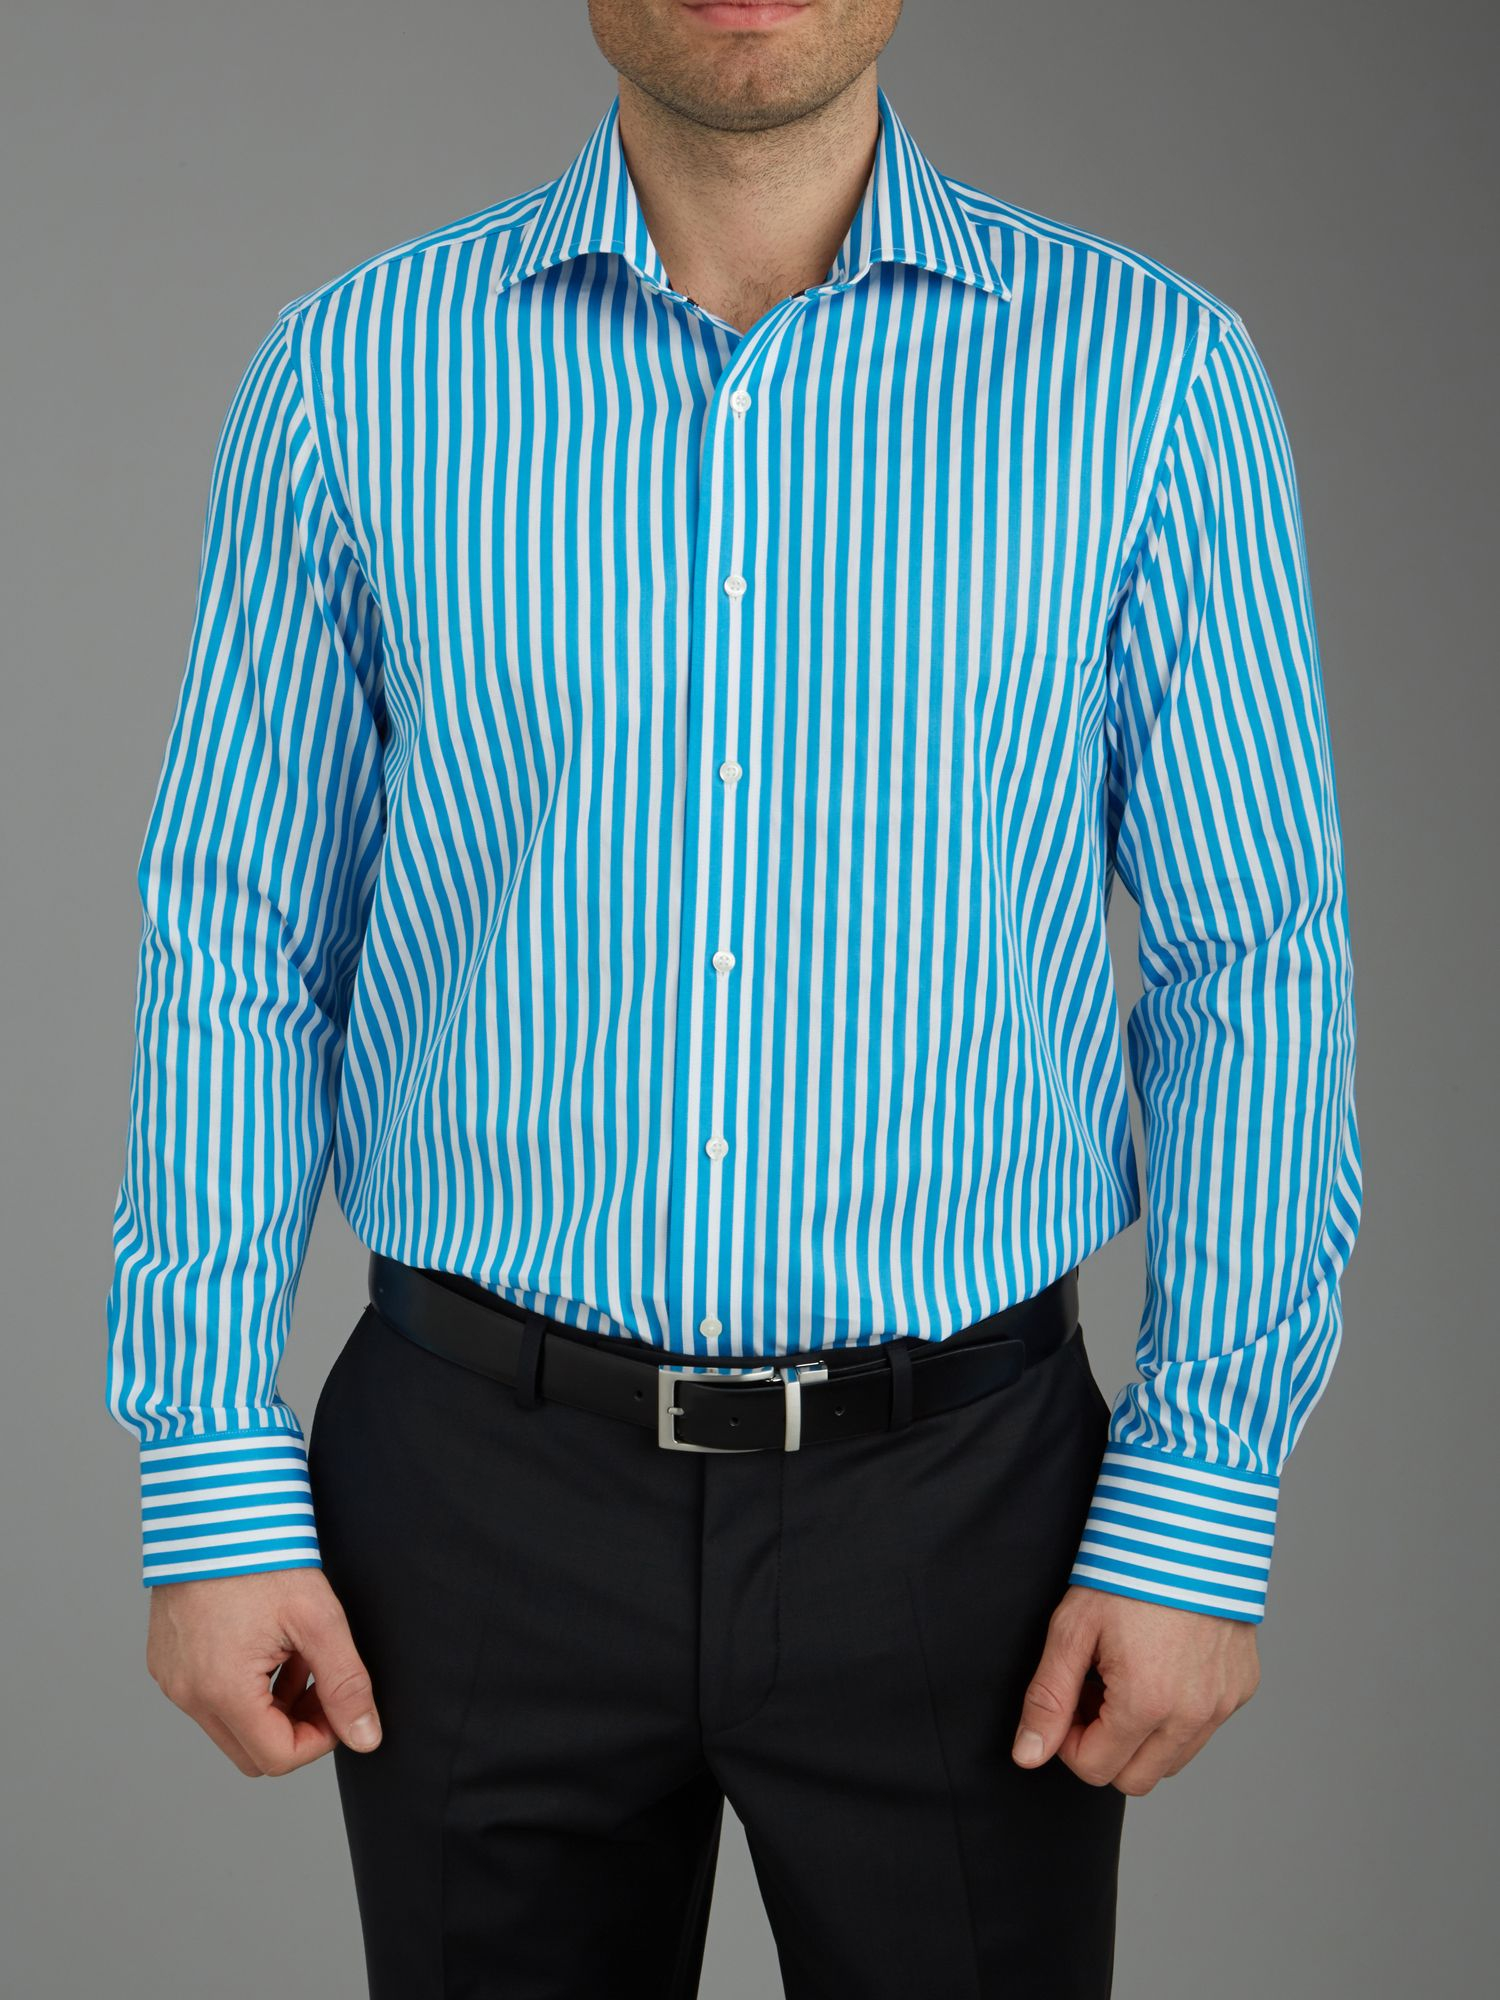 Paul costelloe Sateen Bengal Stripe Long Sleeve Shirt in Blue for Men ...